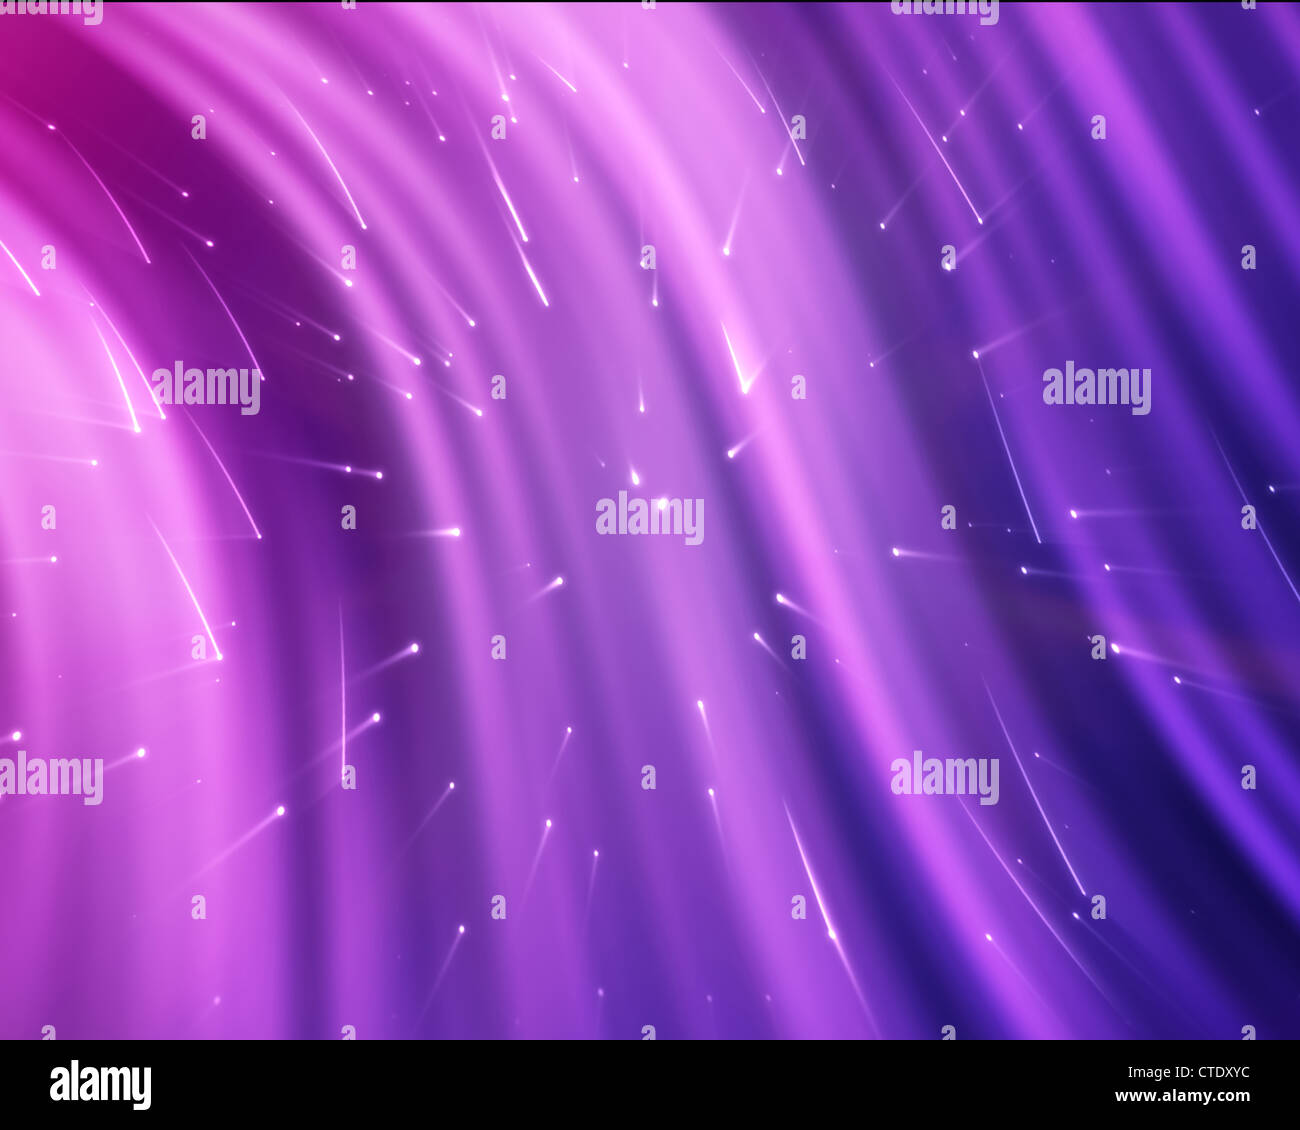 Purple streams of light with shining stars Stock Photo